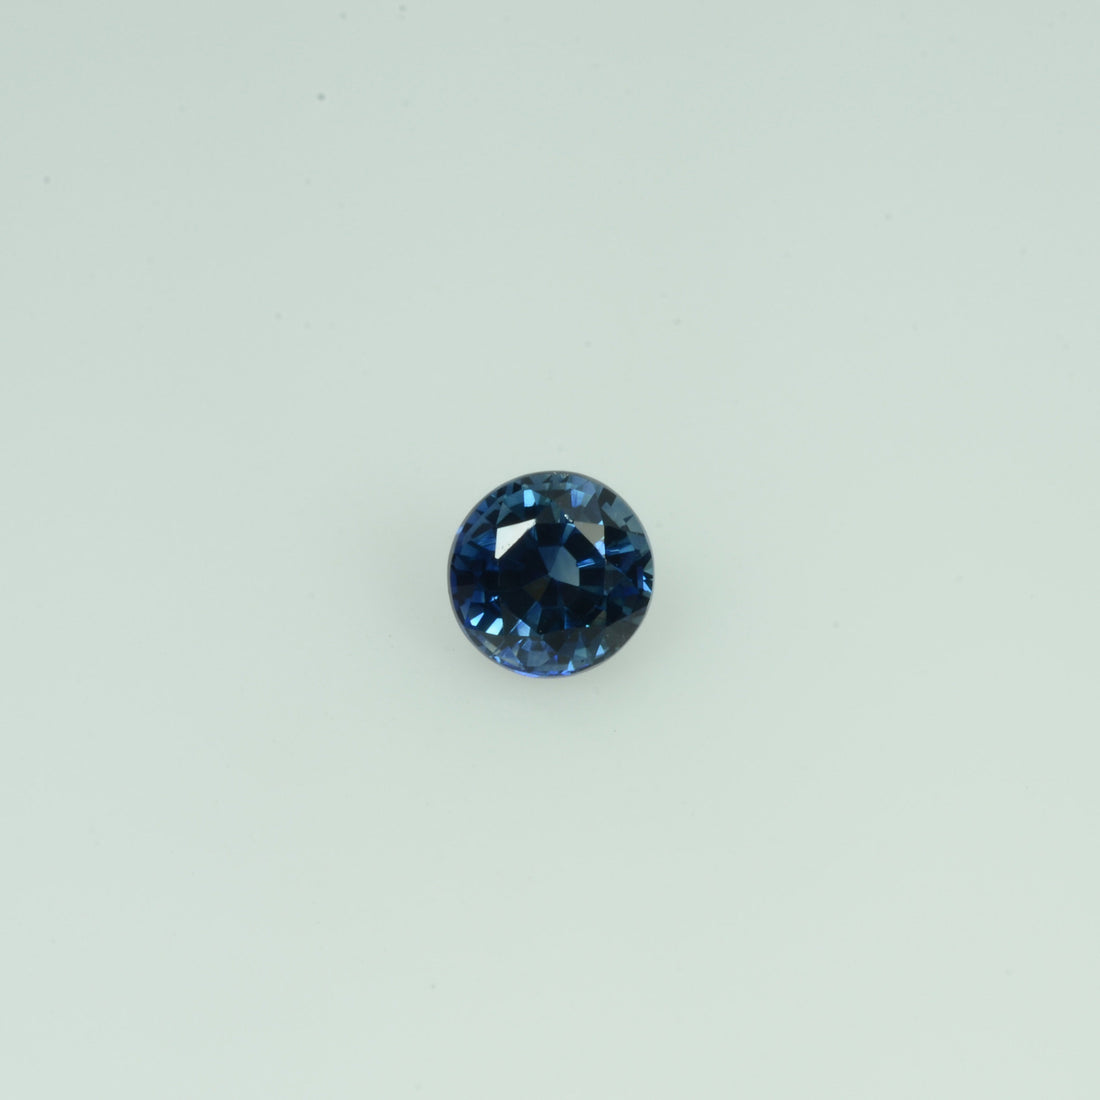 4.5 mm Natural  Blue Green Sapphire Loose Gemstone Round Cut - Thai Gems Export Ltd.